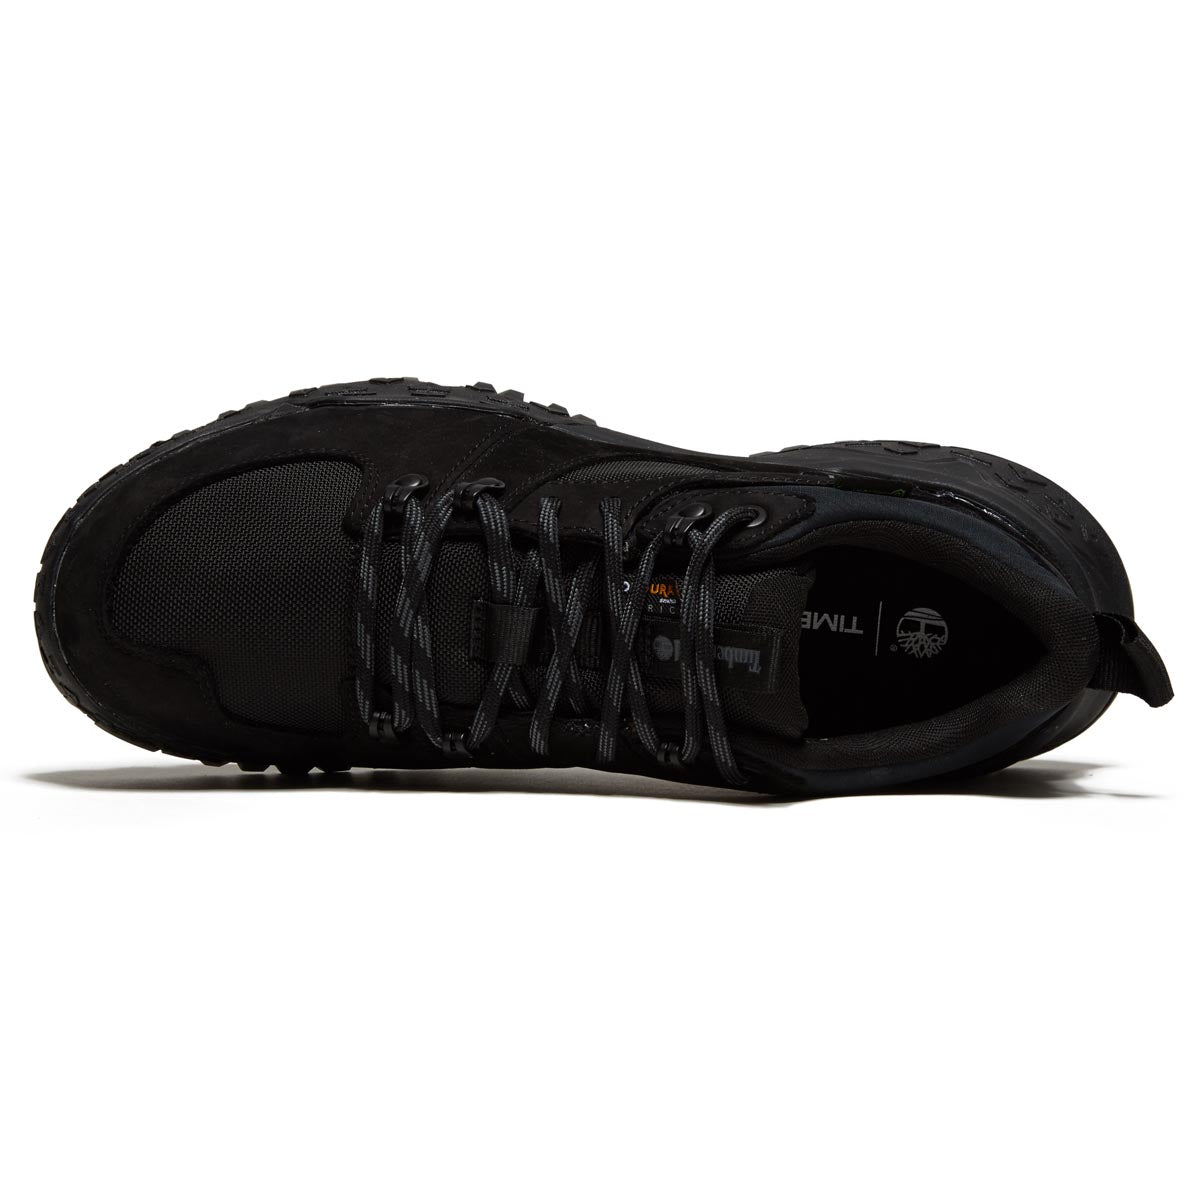 Timberland Motion Scramble
low Lace Up Wp Shoes - Black Nubuck image 3